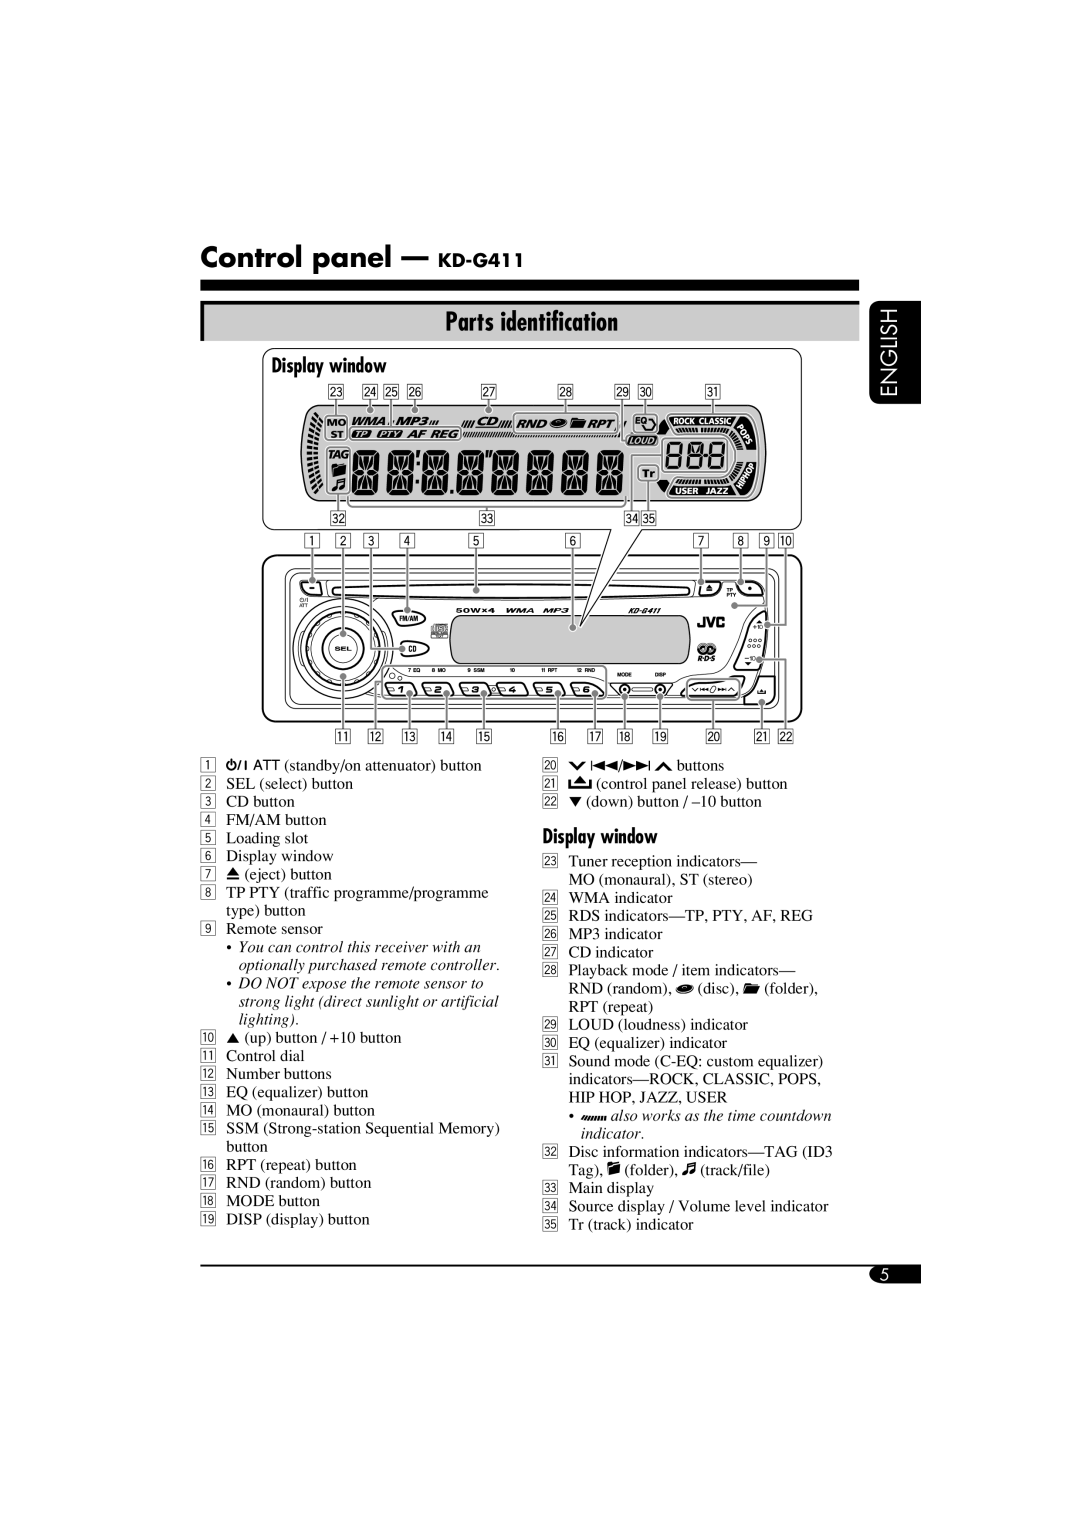 JVC manual Control panel - KD-G411, Parts identification, Display window, English 